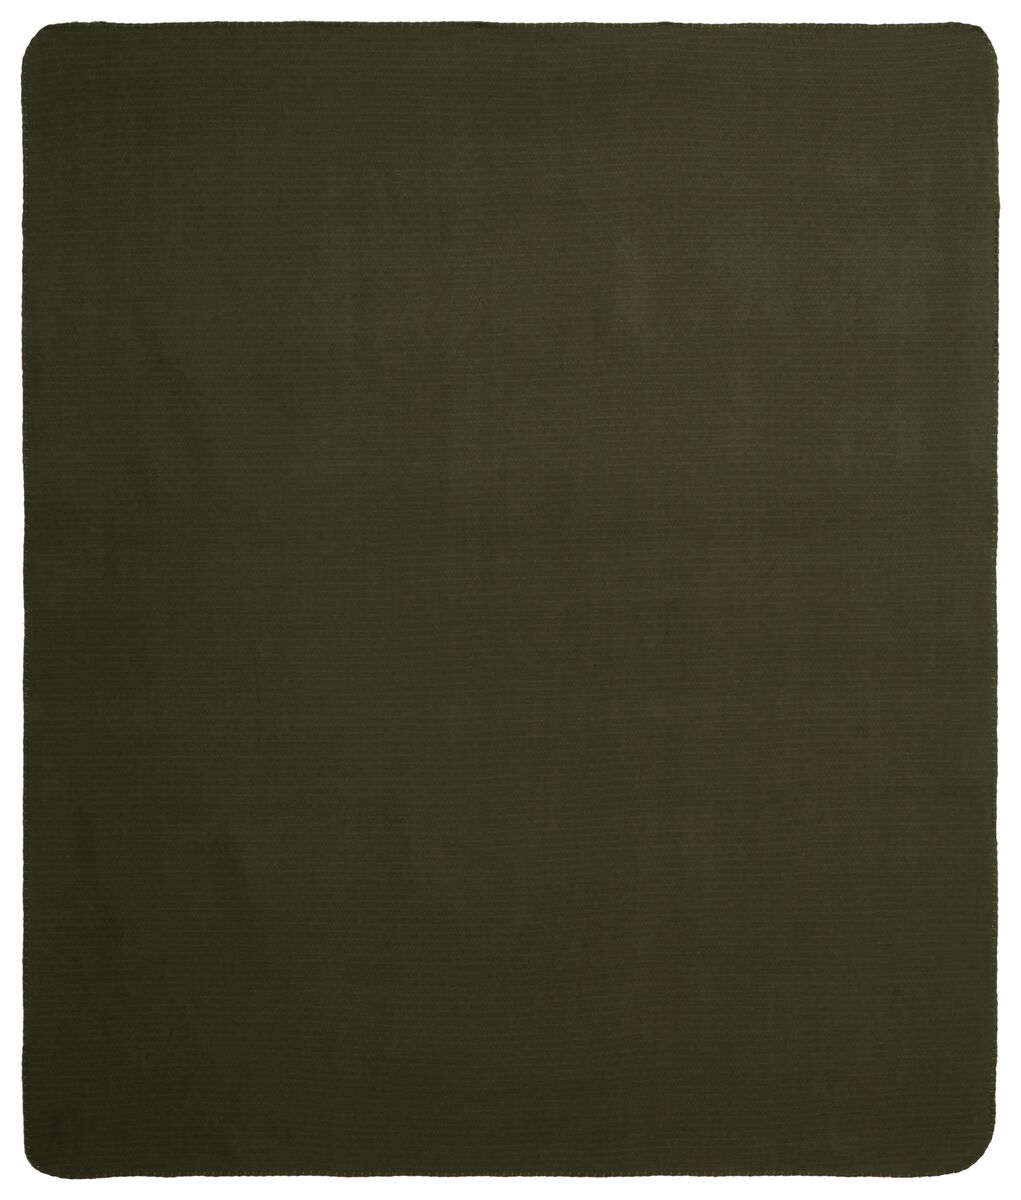 plaid fleece groen 130x150 - HEMA